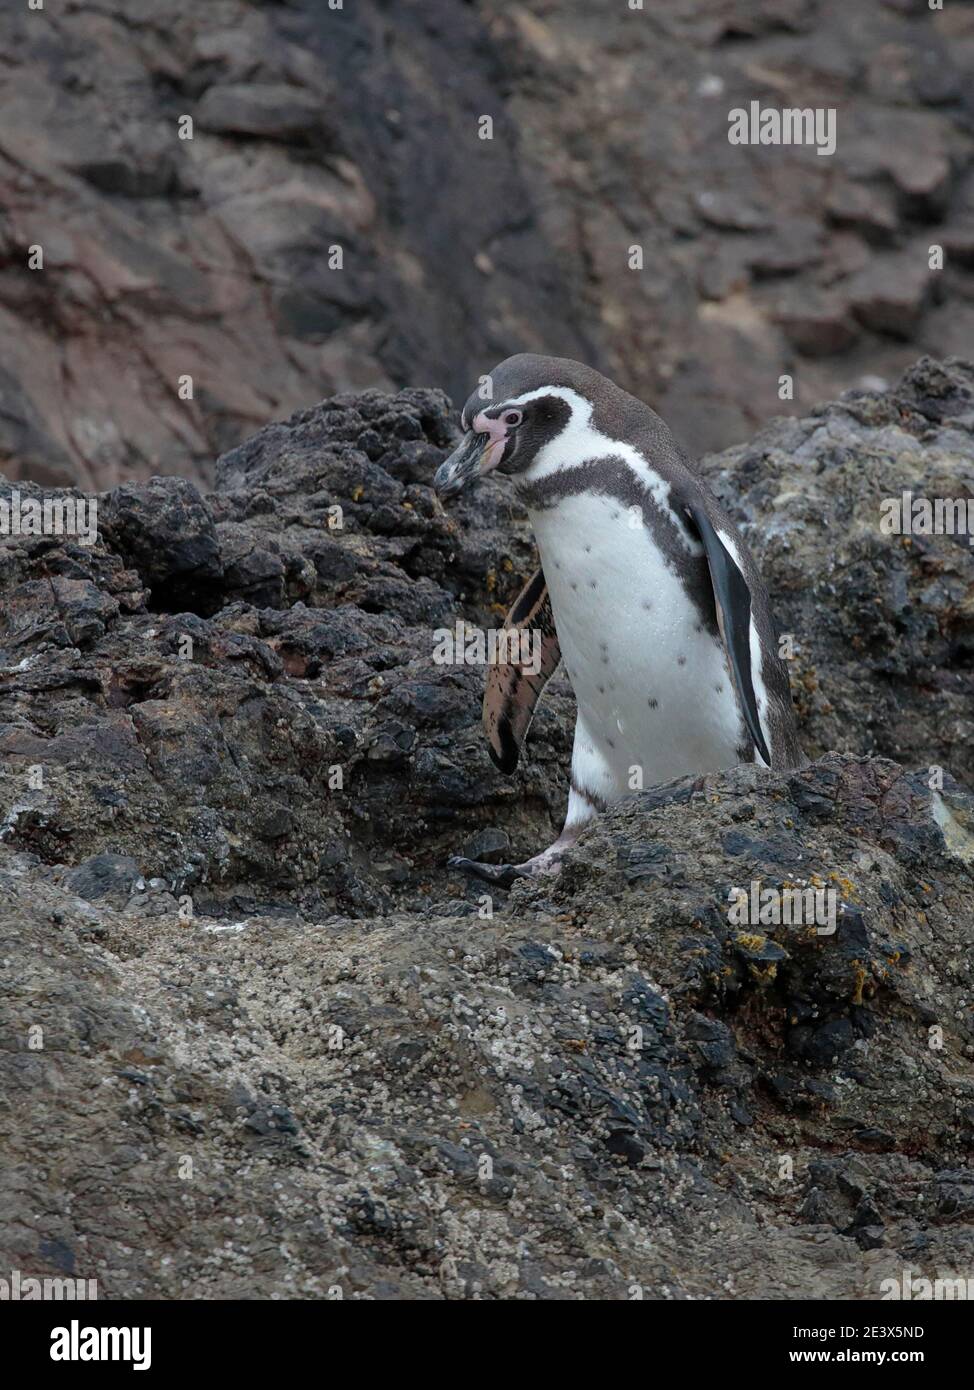 Humboldt Penguin (Spheniscus humboldti), penguin colony at Bahia Punihuil, Chiloe Island, Los Lagos Region, south Chile 11th Jan 2016 Stock Photo